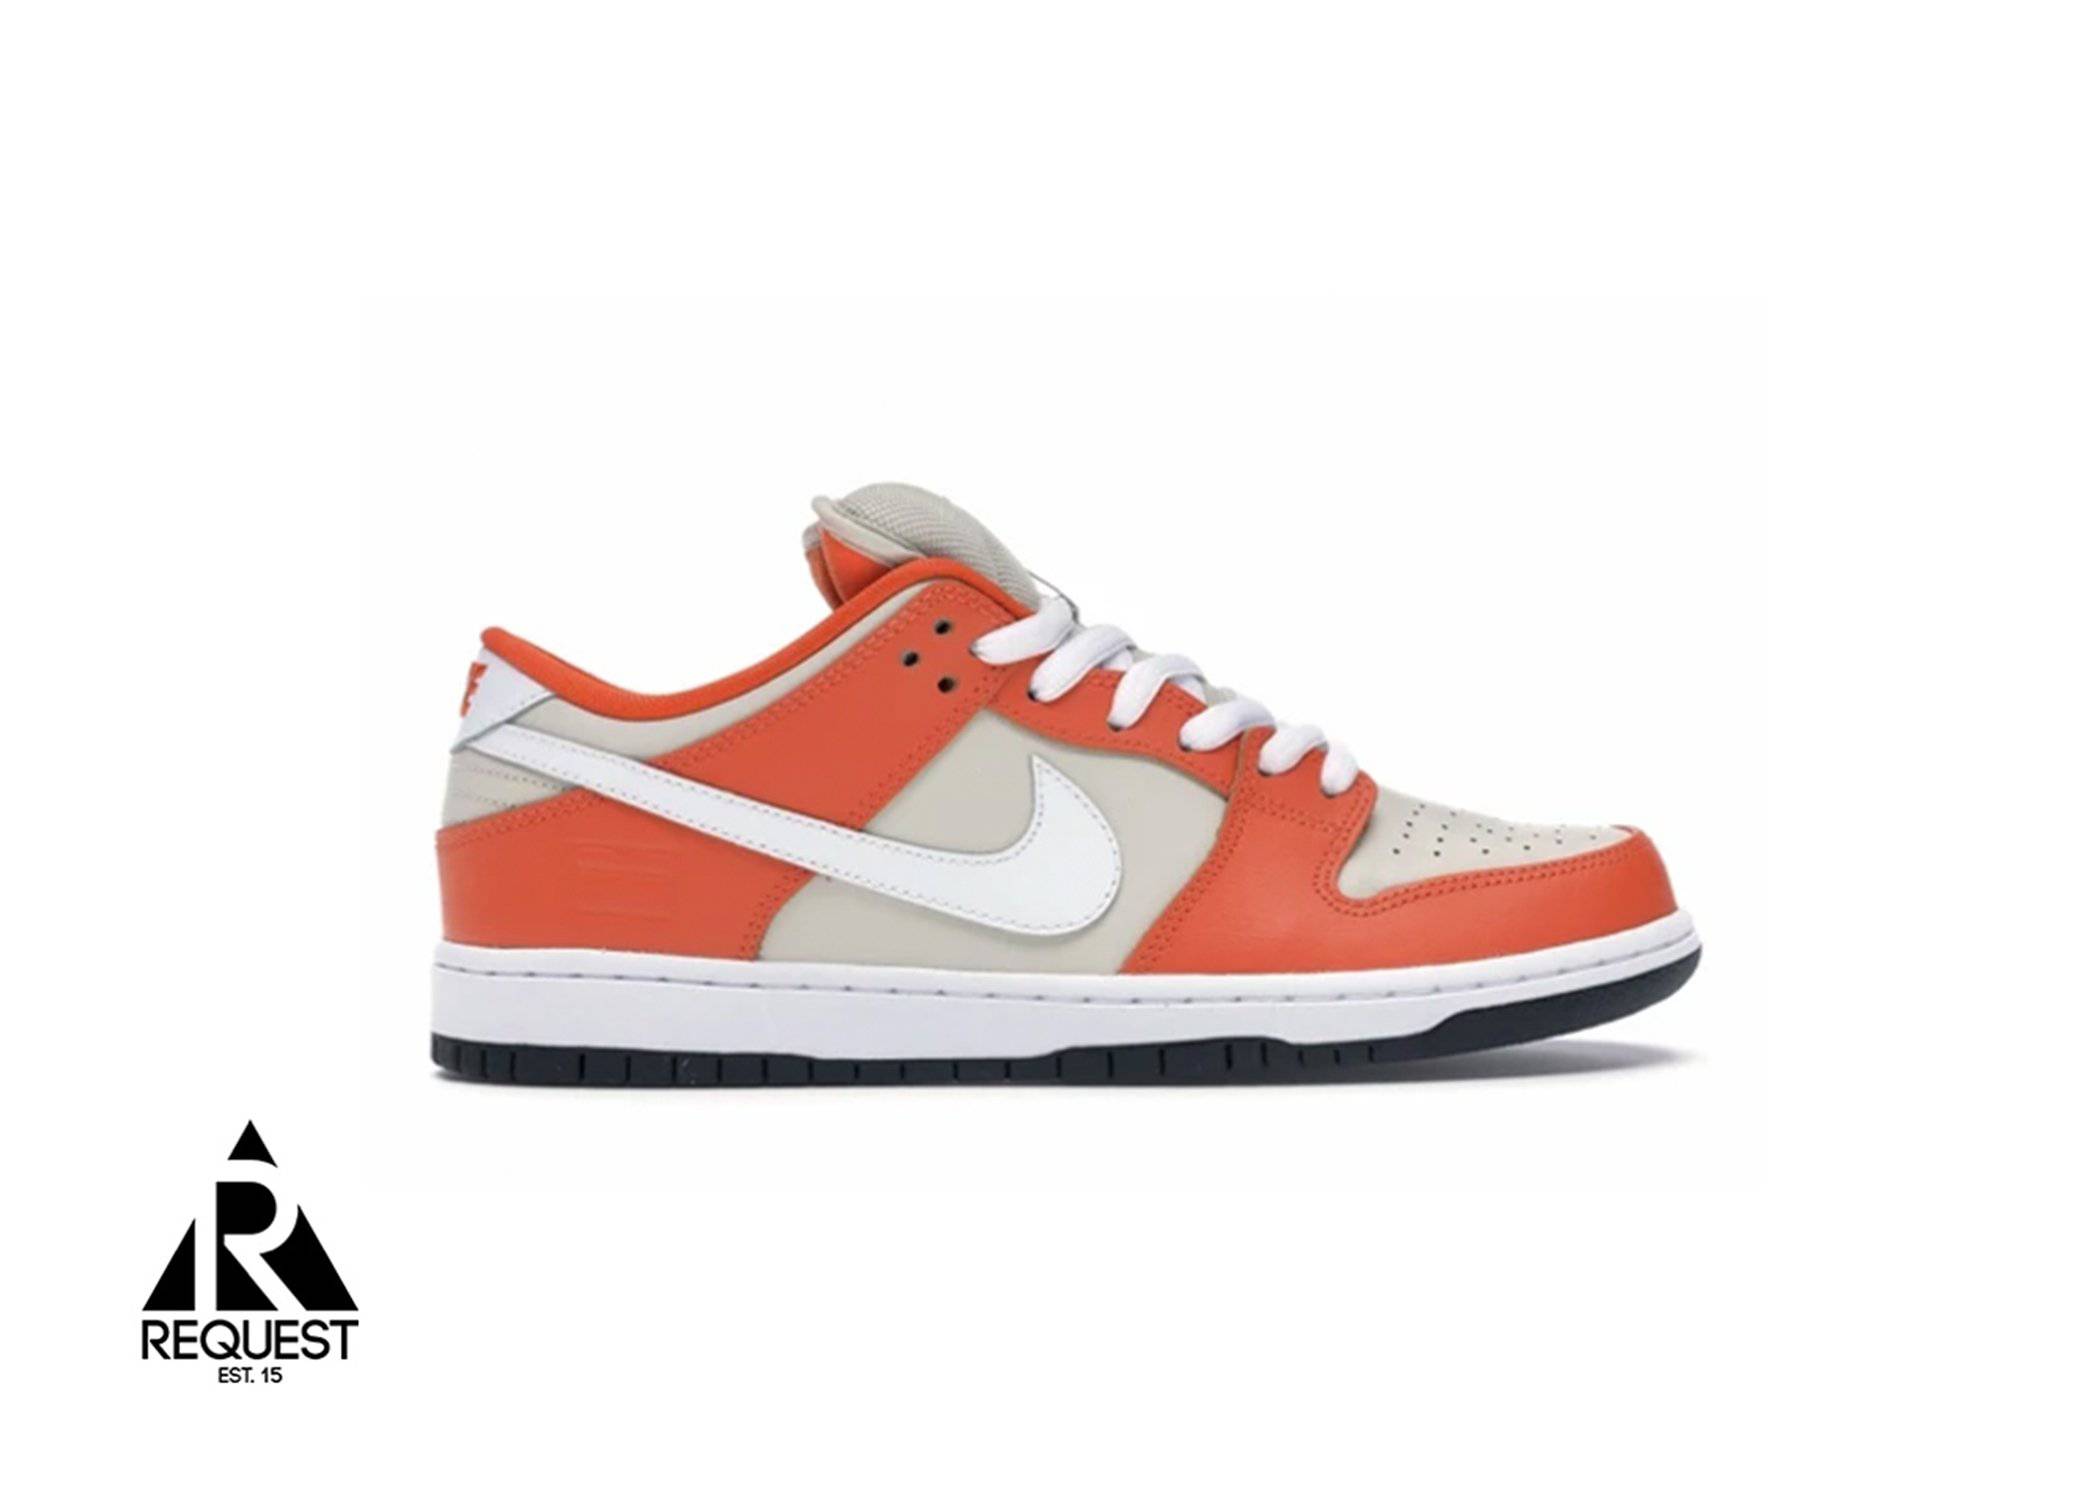 Nike Sb Dunk SB low “Orange Box”